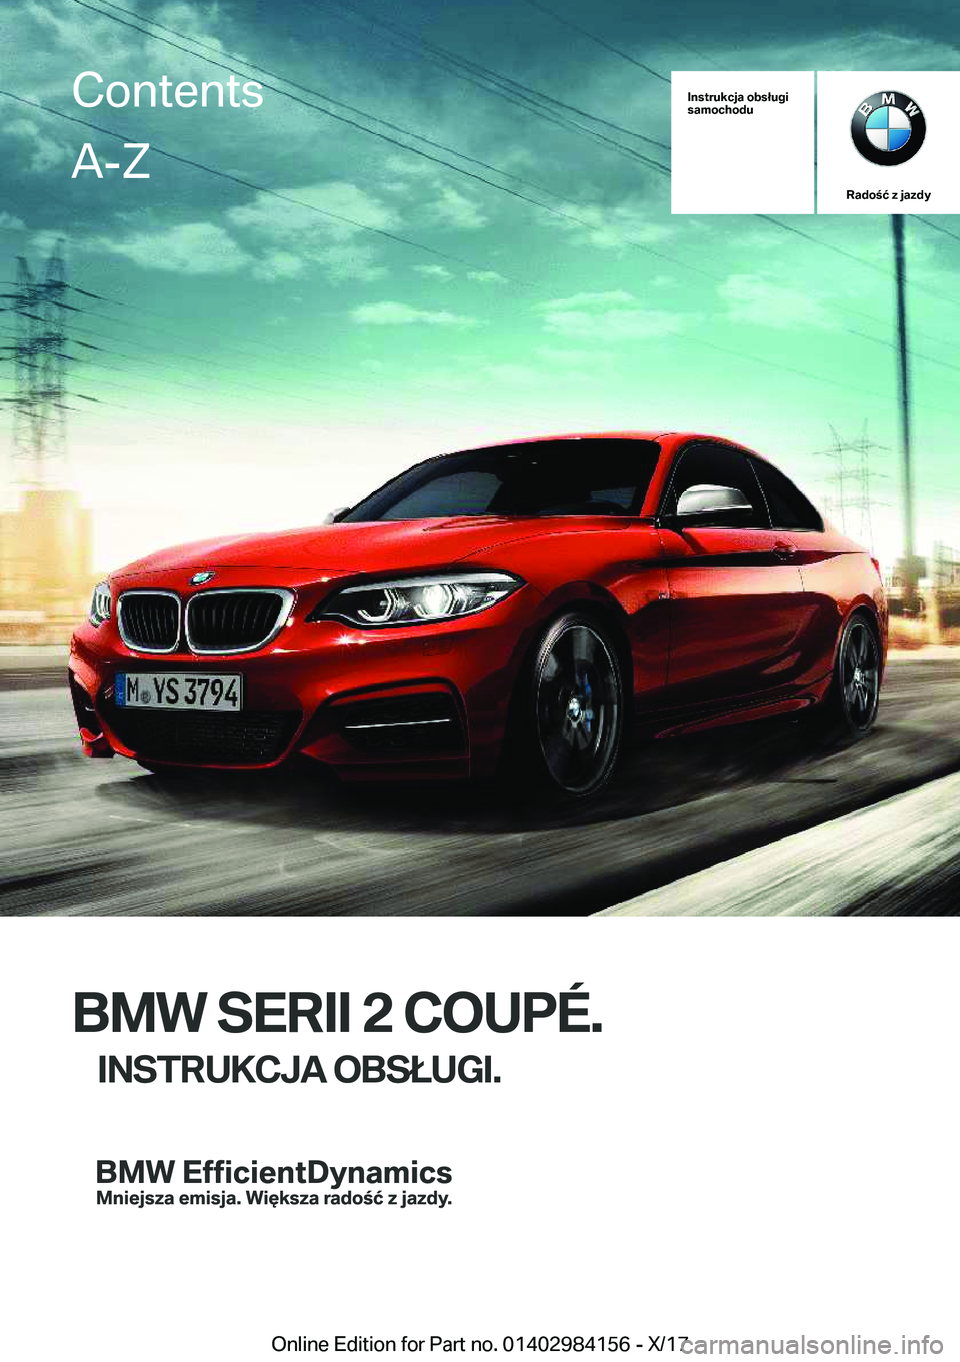 BMW 2 SERIES COUPE 2018  Instrukcja obsługi (in Polish) �I�n�s�t�r�u�k�c�j�a��o�b�s�ł�u�g�i
�s�a�m�o�c�h�o�d�u
�R�a�d�o�